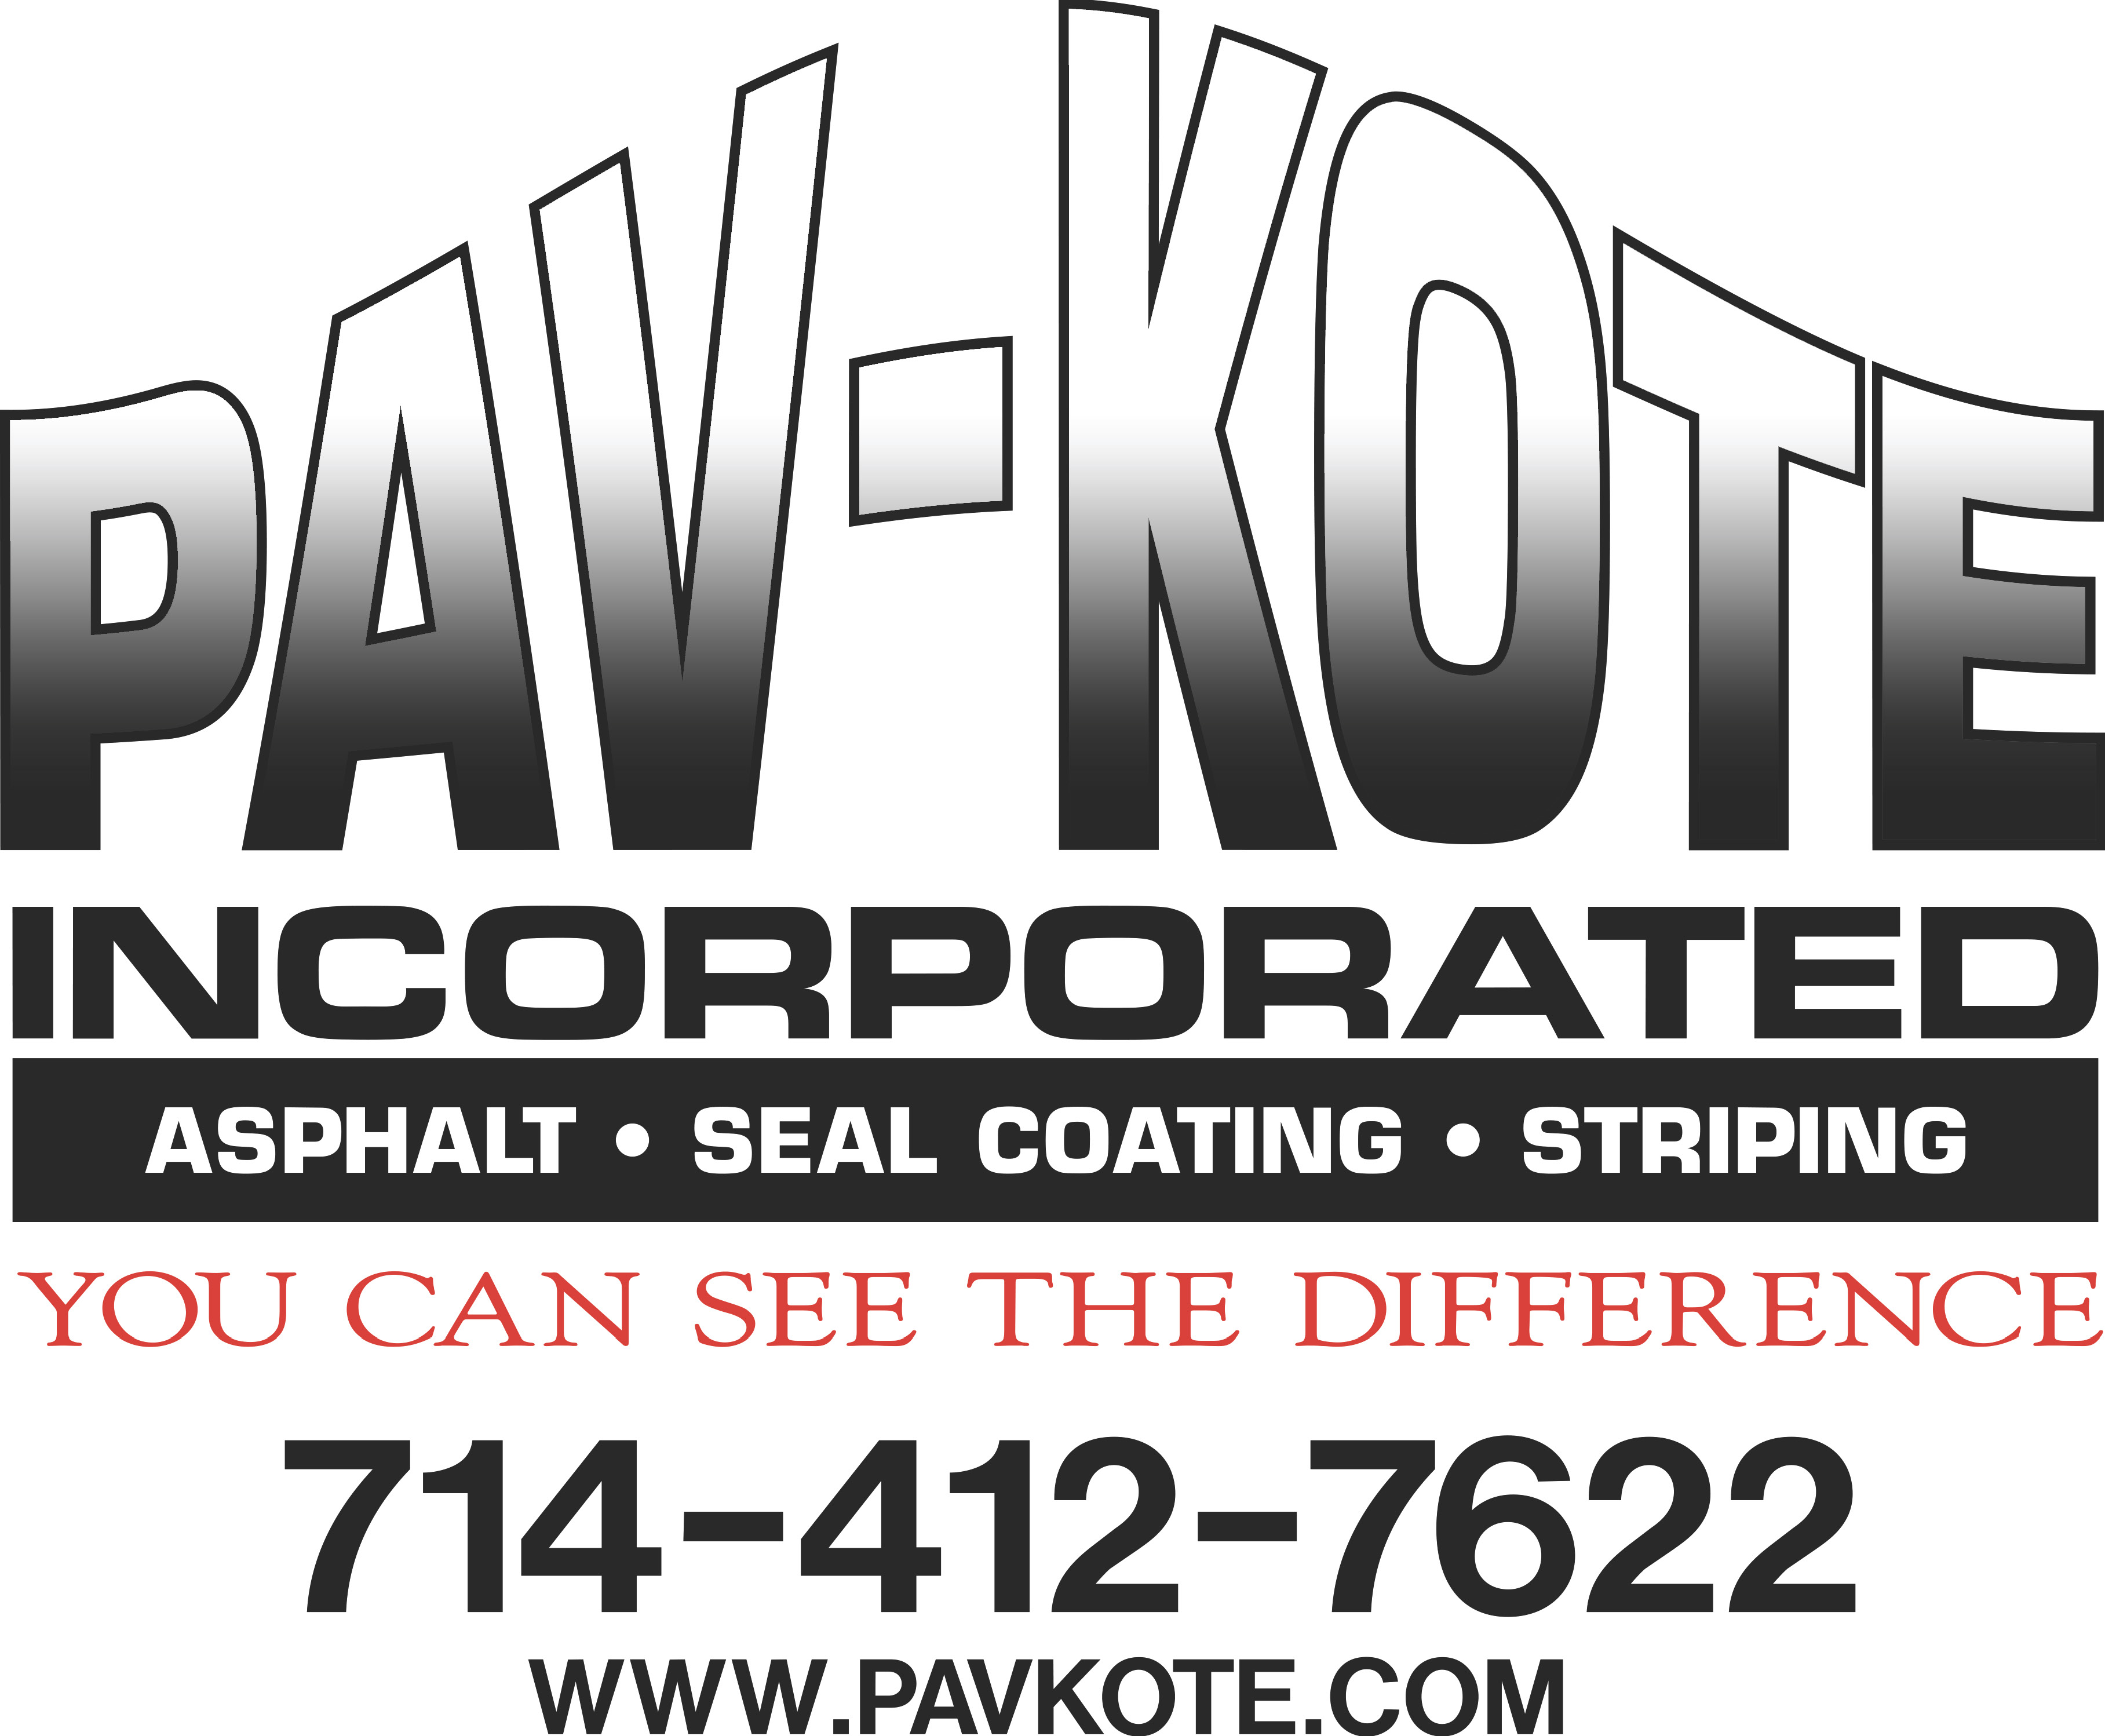 Pav-Kote Inc.